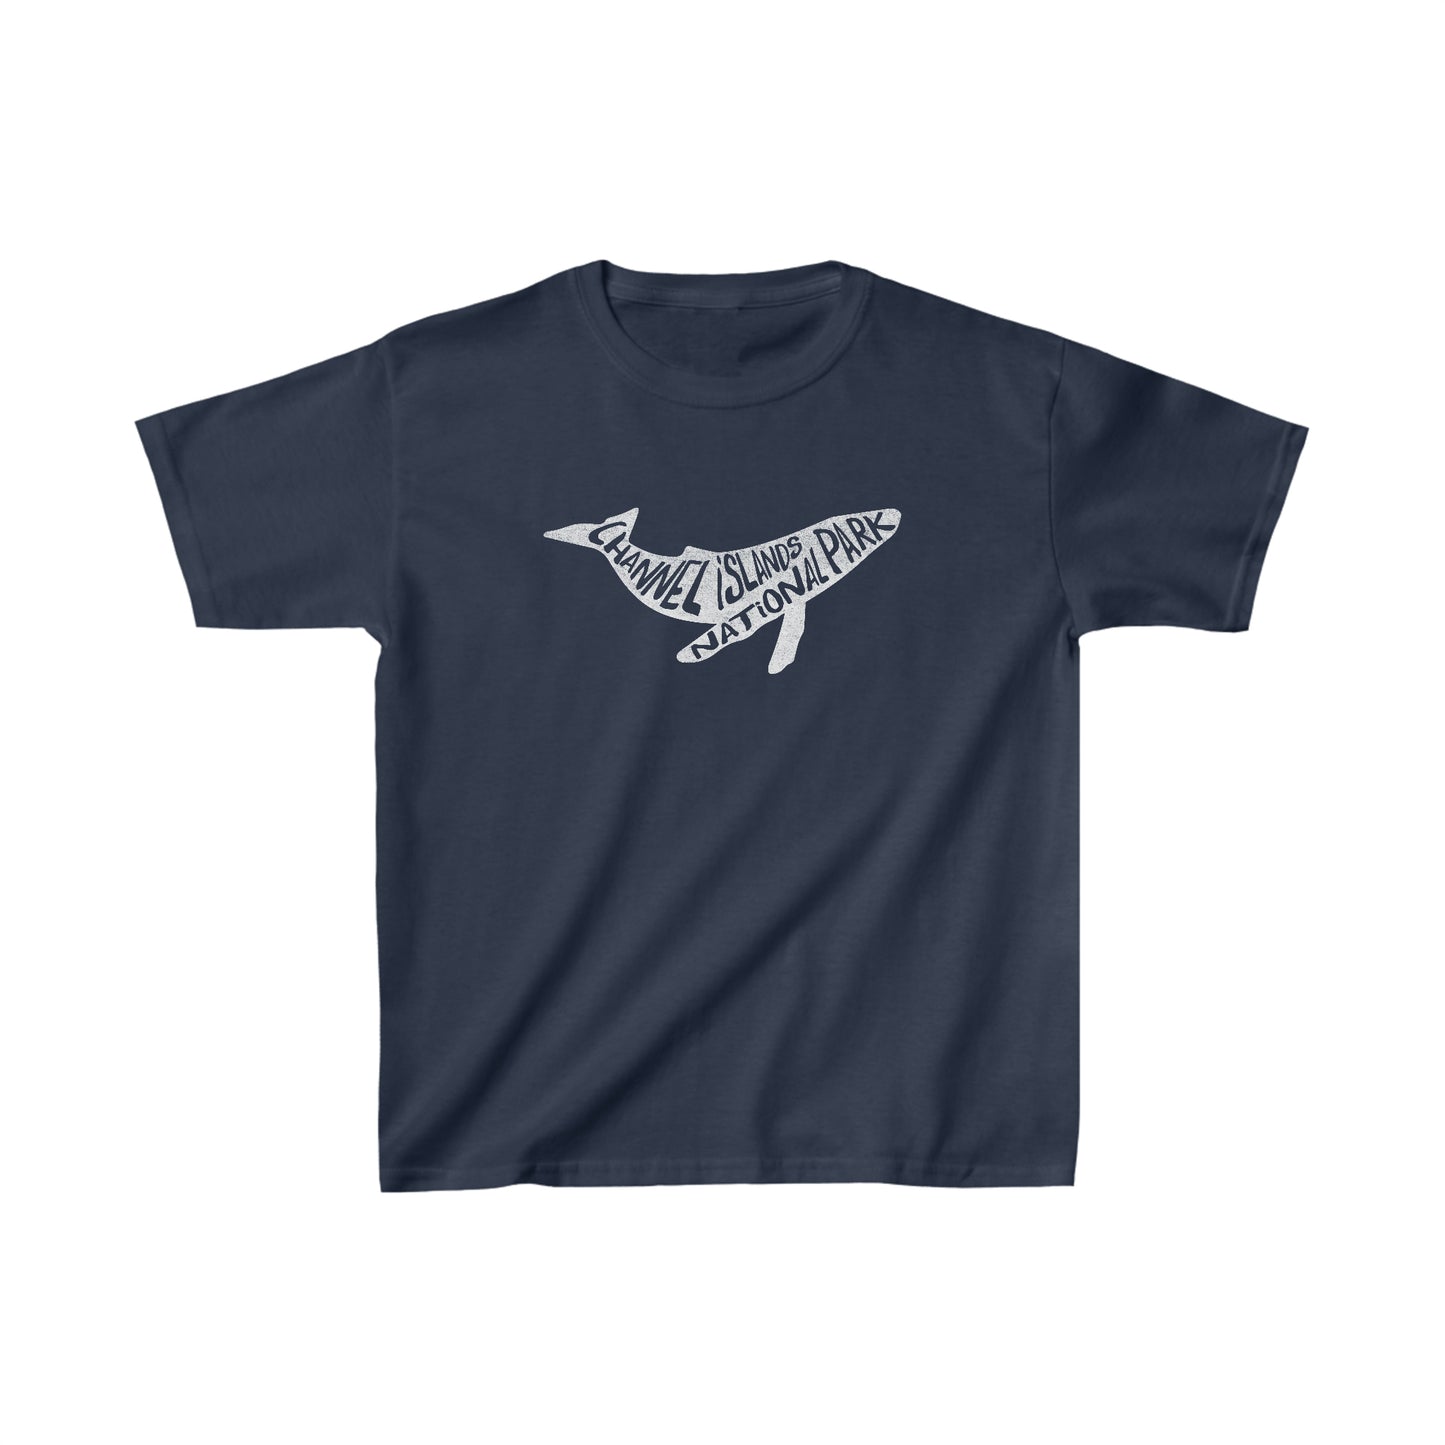 Channel Islands National Park Child T-Shirt - Humpback Whale